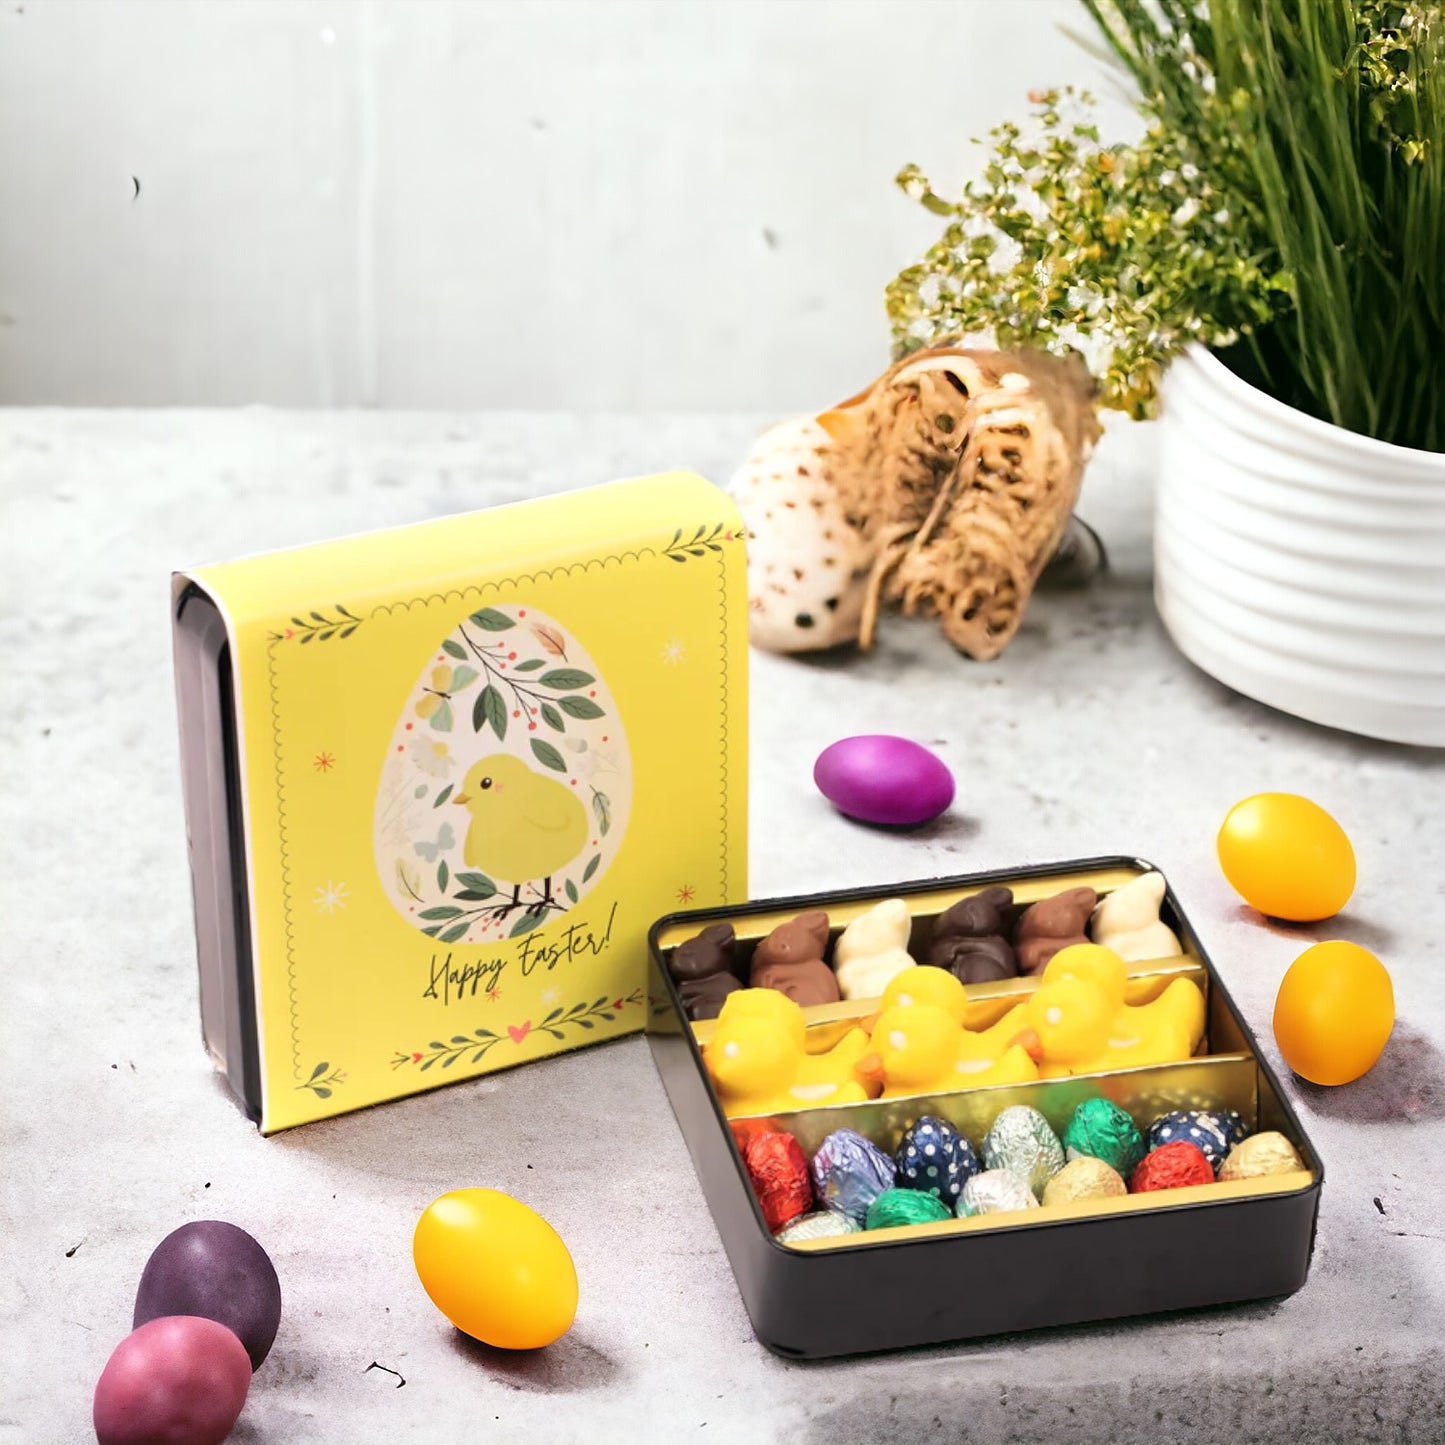 ZOROY Easter Hunt Basket with Assorted Large Egg's & Ducks, Bunnies Combo Gift Hamper